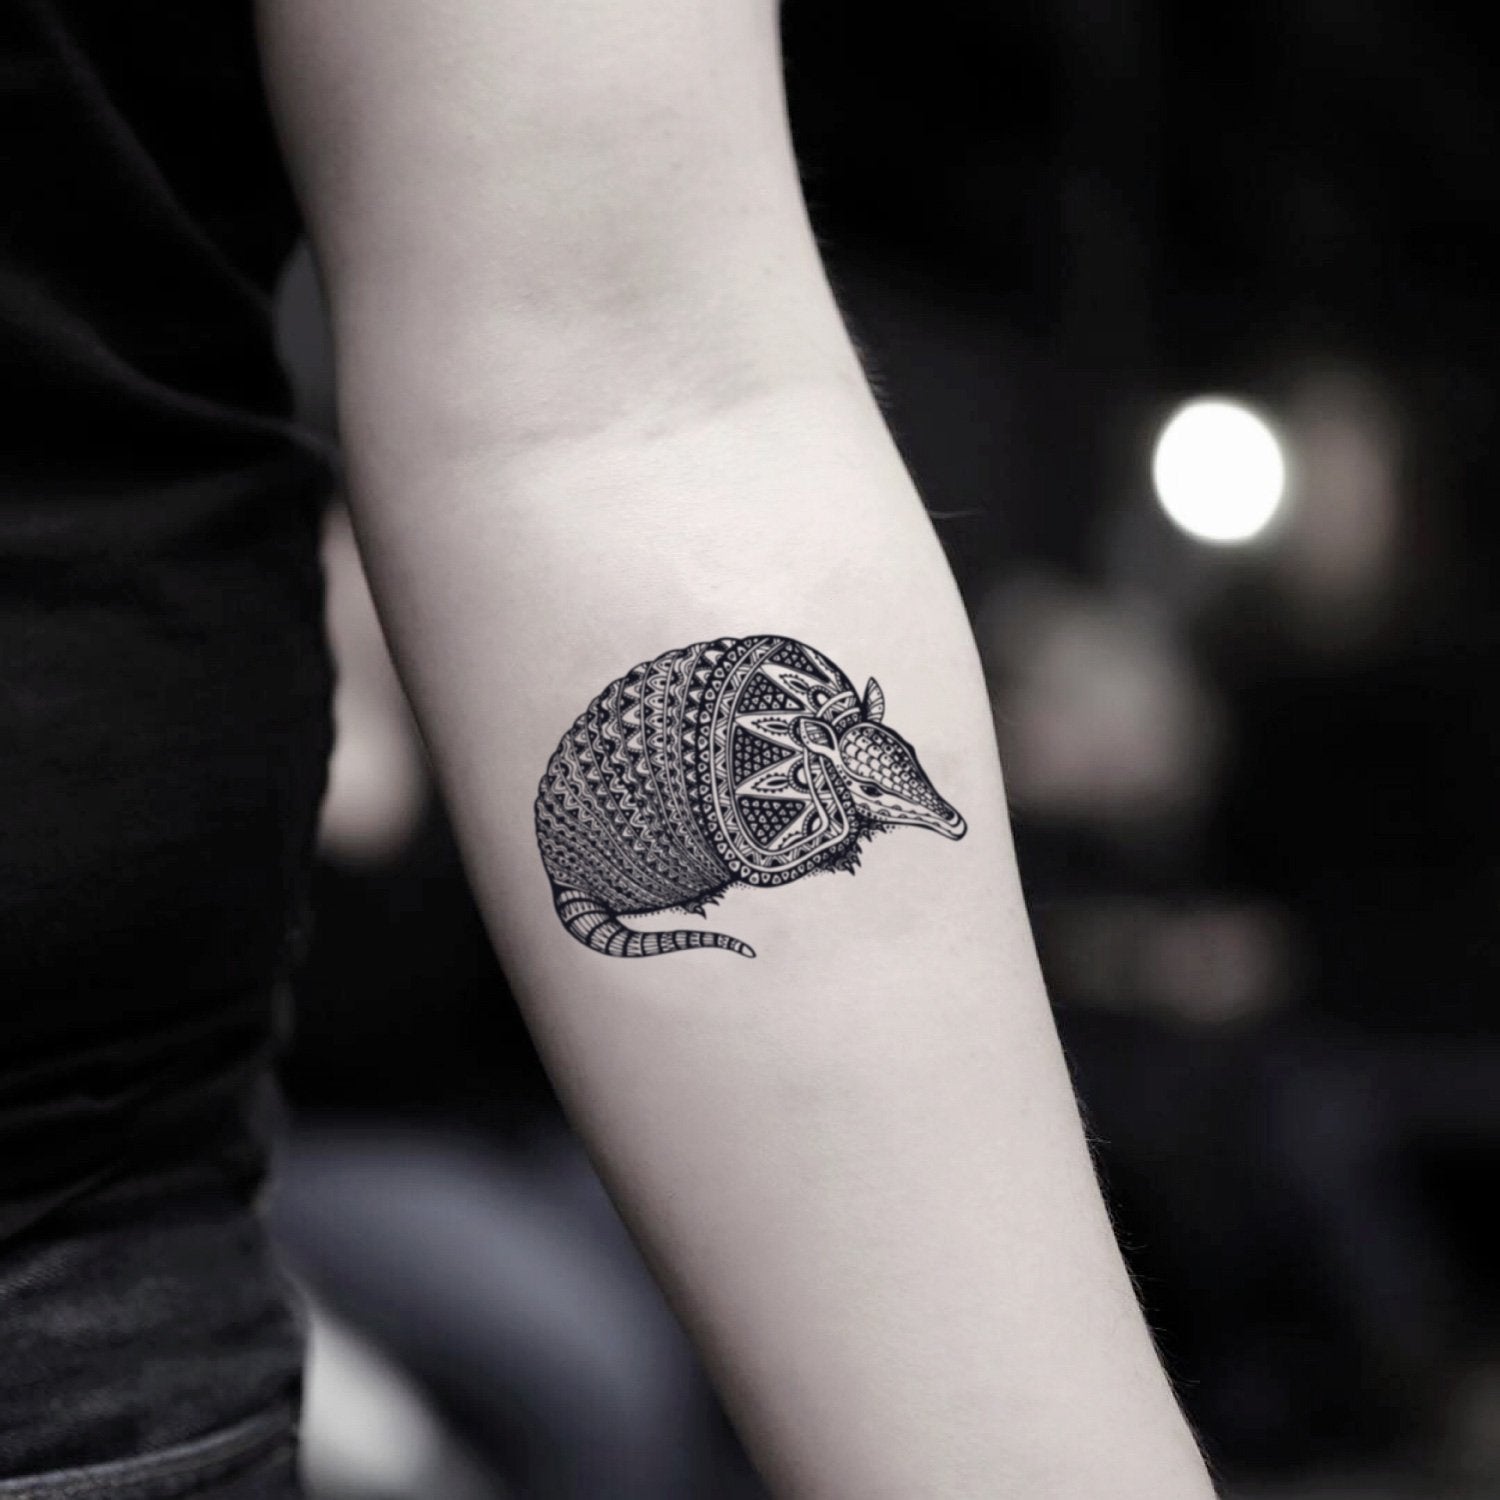 fake small armadillo pangolin animal temporary tattoo sticker design idea on inner arm